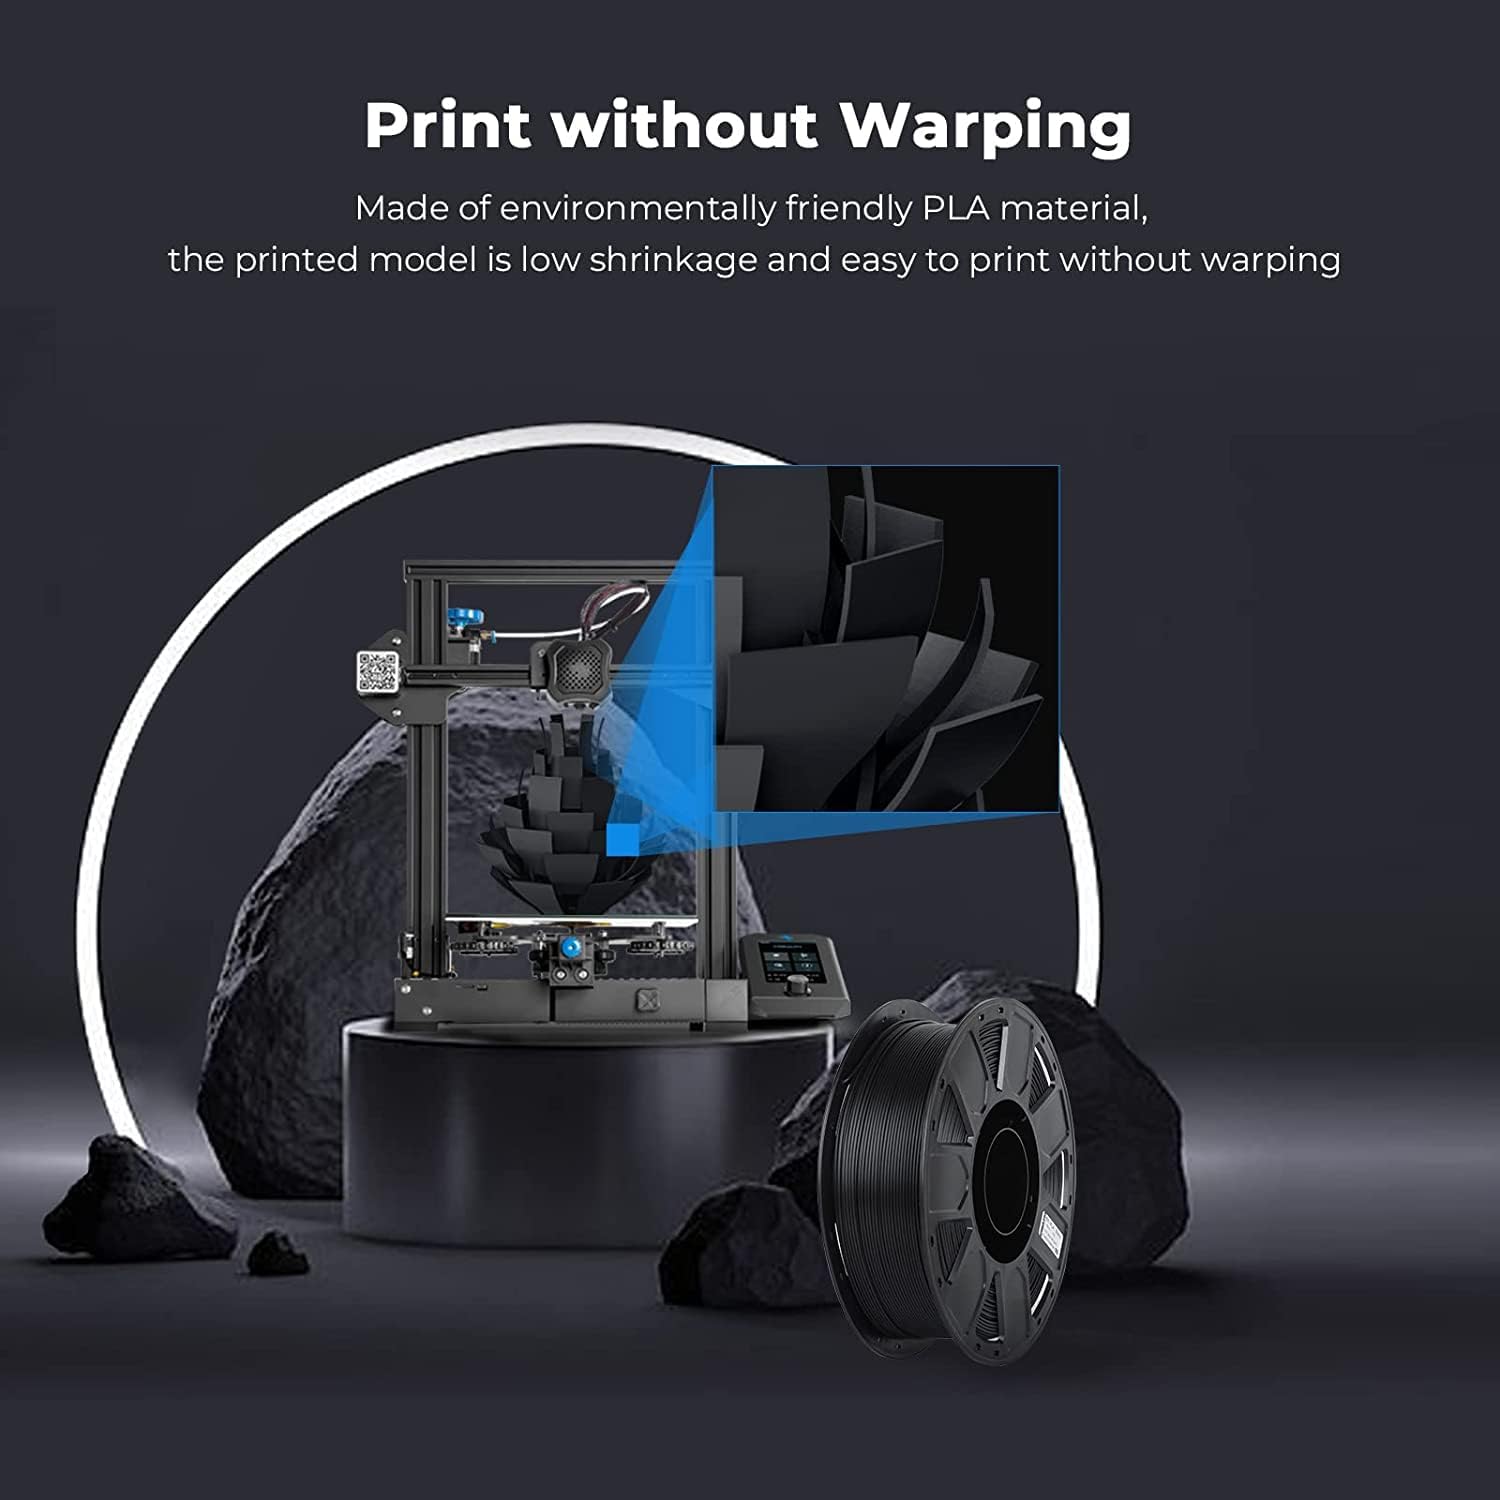 1.75mm 3D Printer Filament PLA - Rainbow 1KG - Office Catch